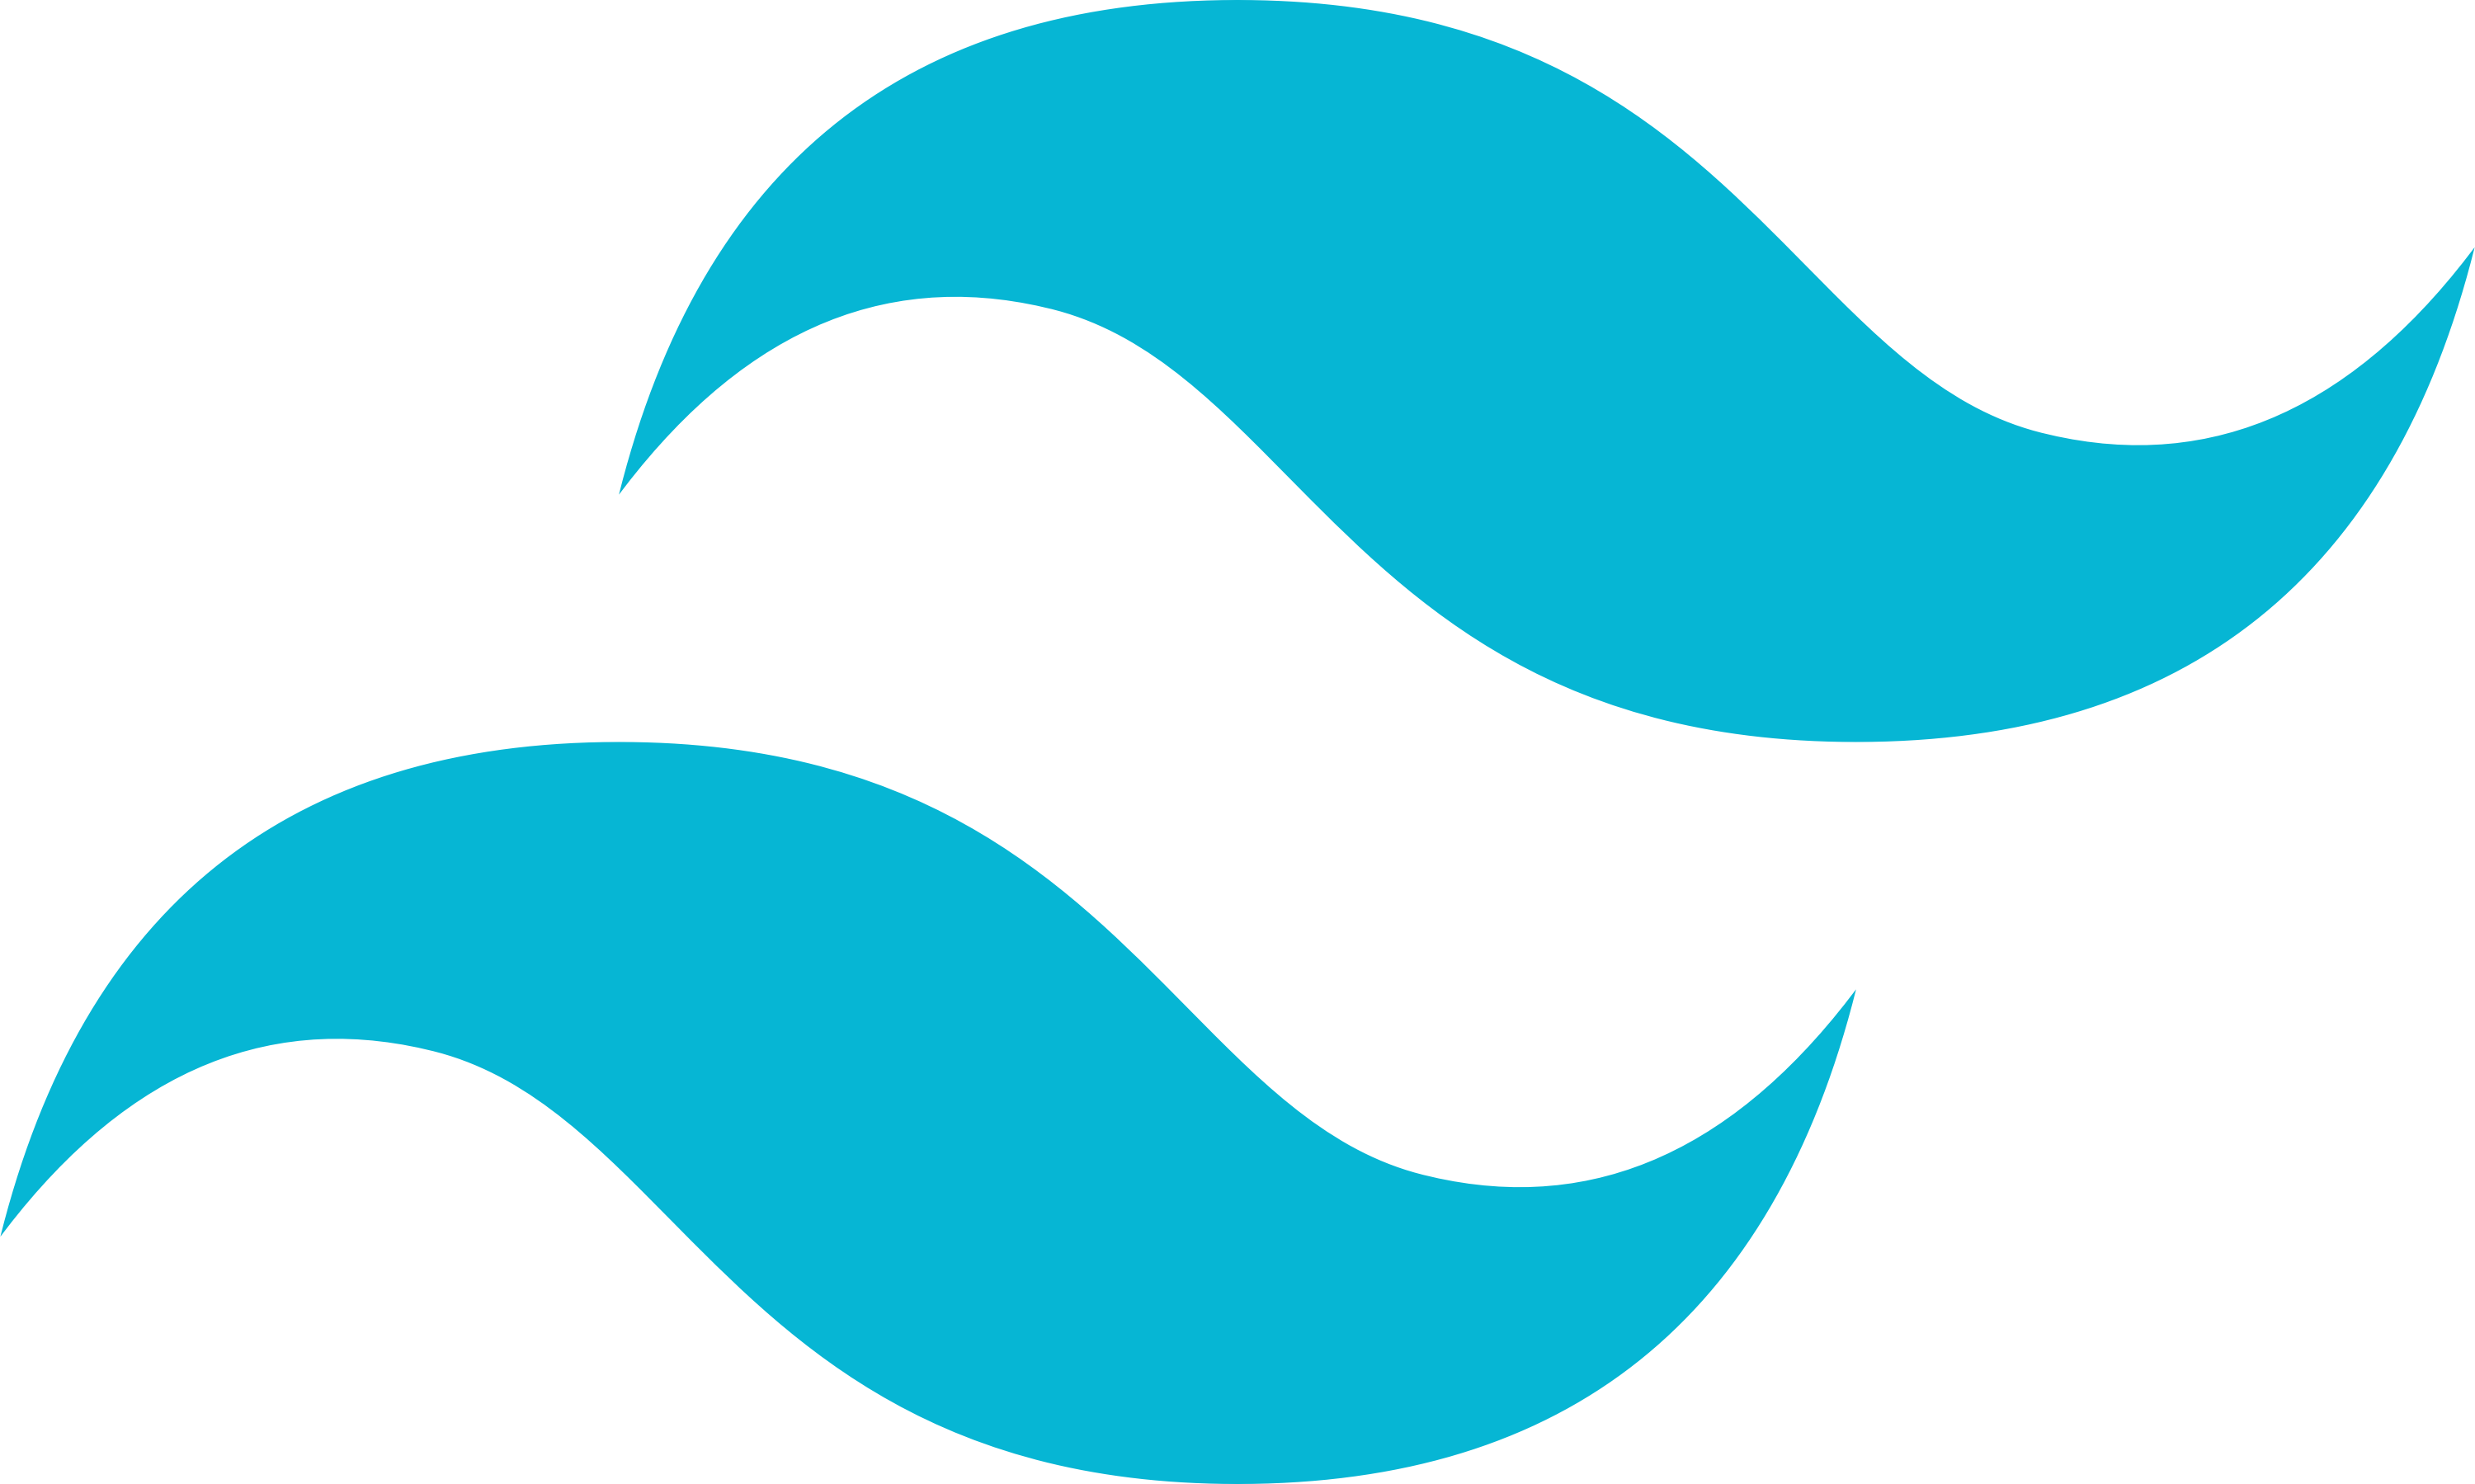 TailwindCSS logo